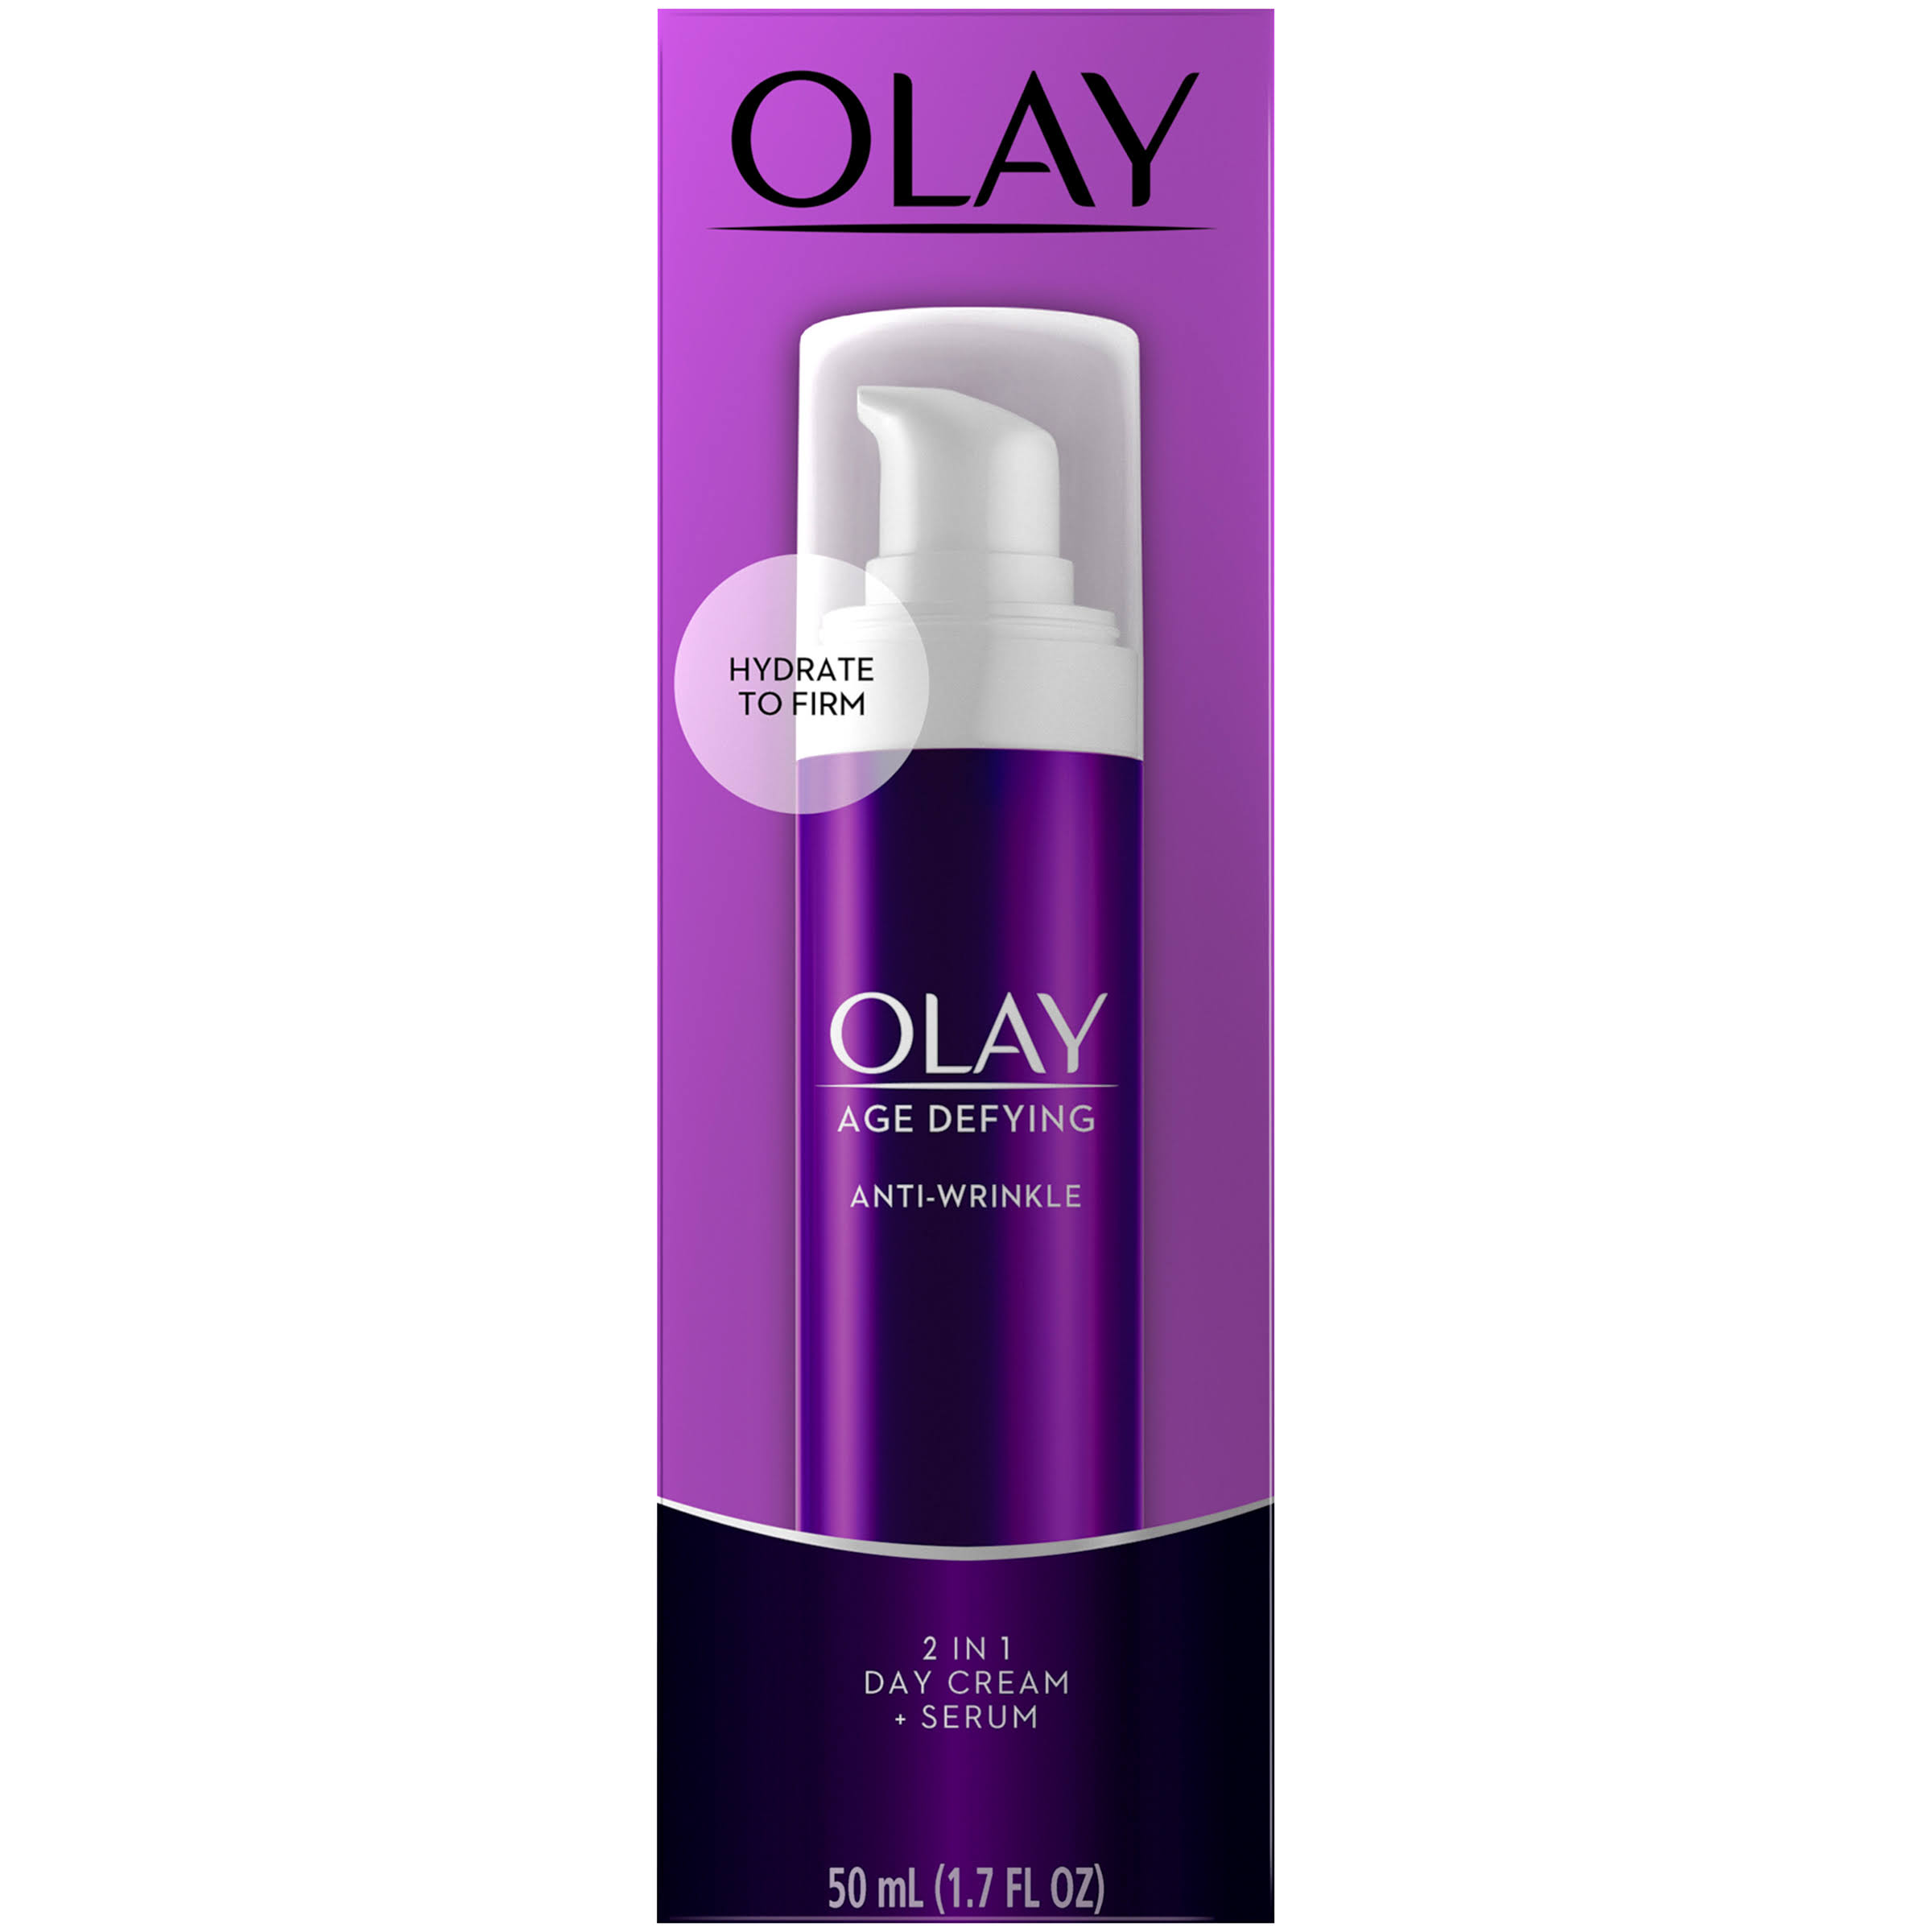 Olay Age Defying 2 in 1 Anti Wrinkle Day Cream plus Serum - 1.7oz